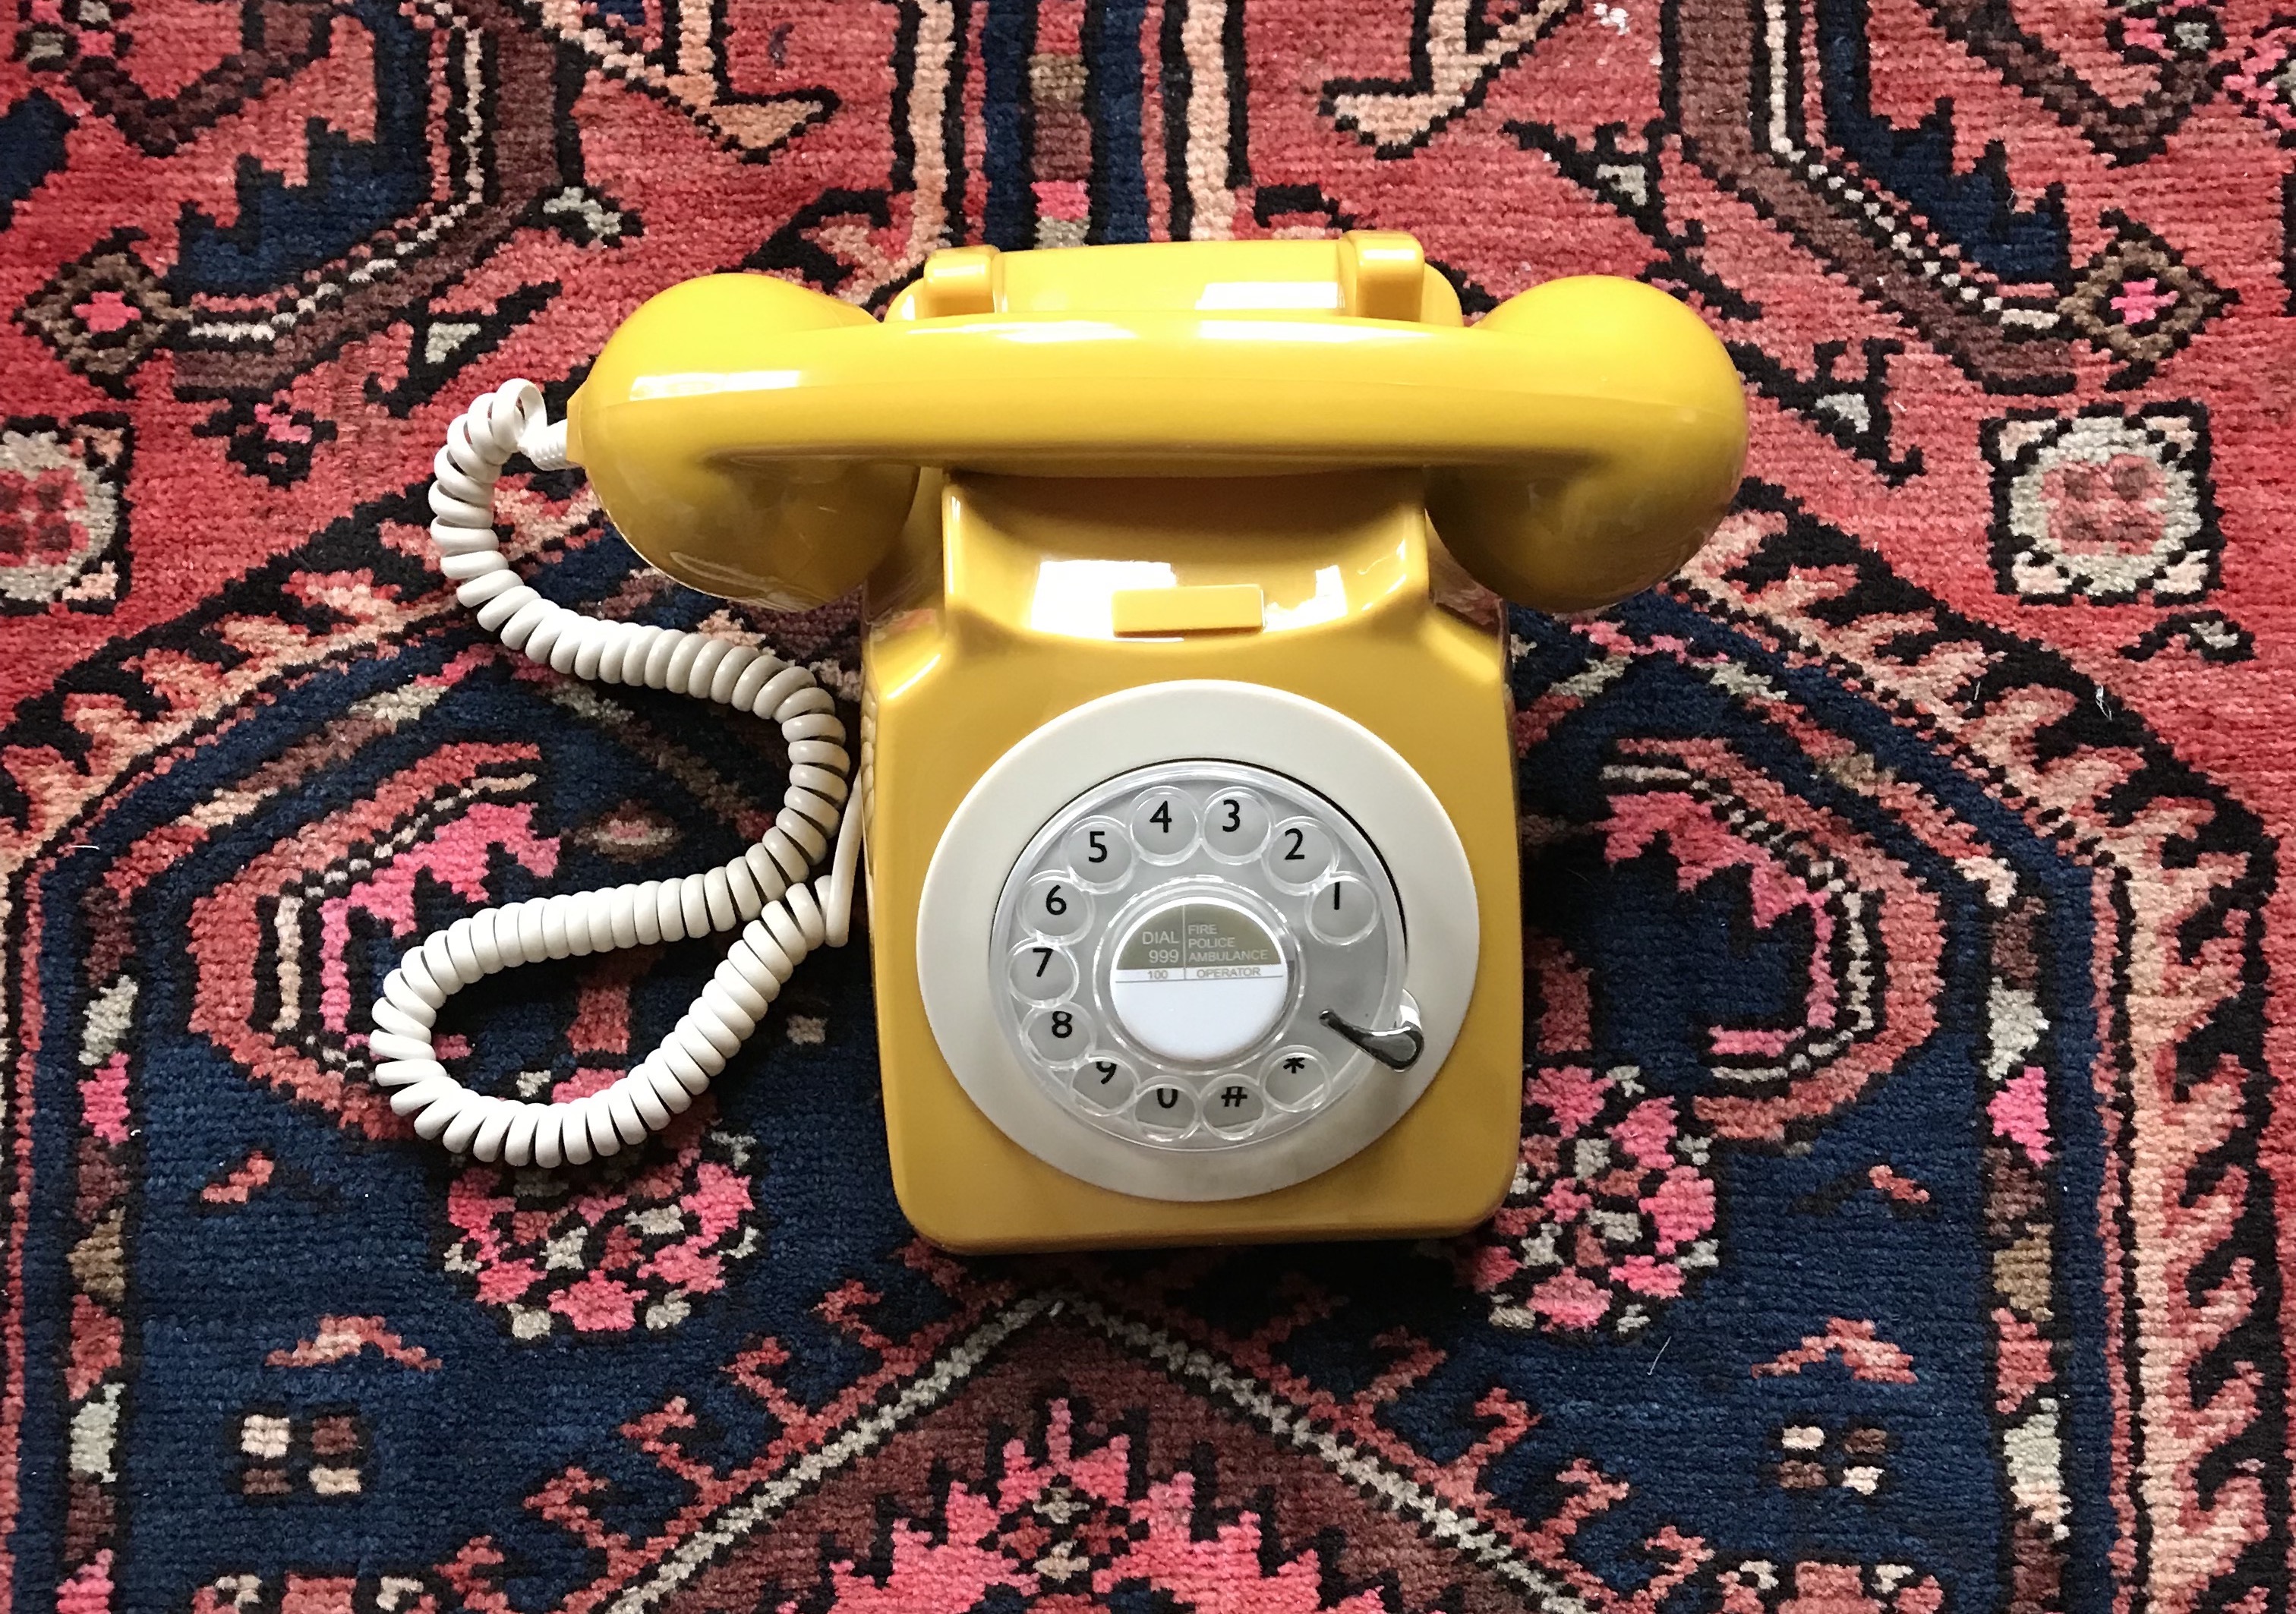 Old-school yellow rotary phone on carpet.